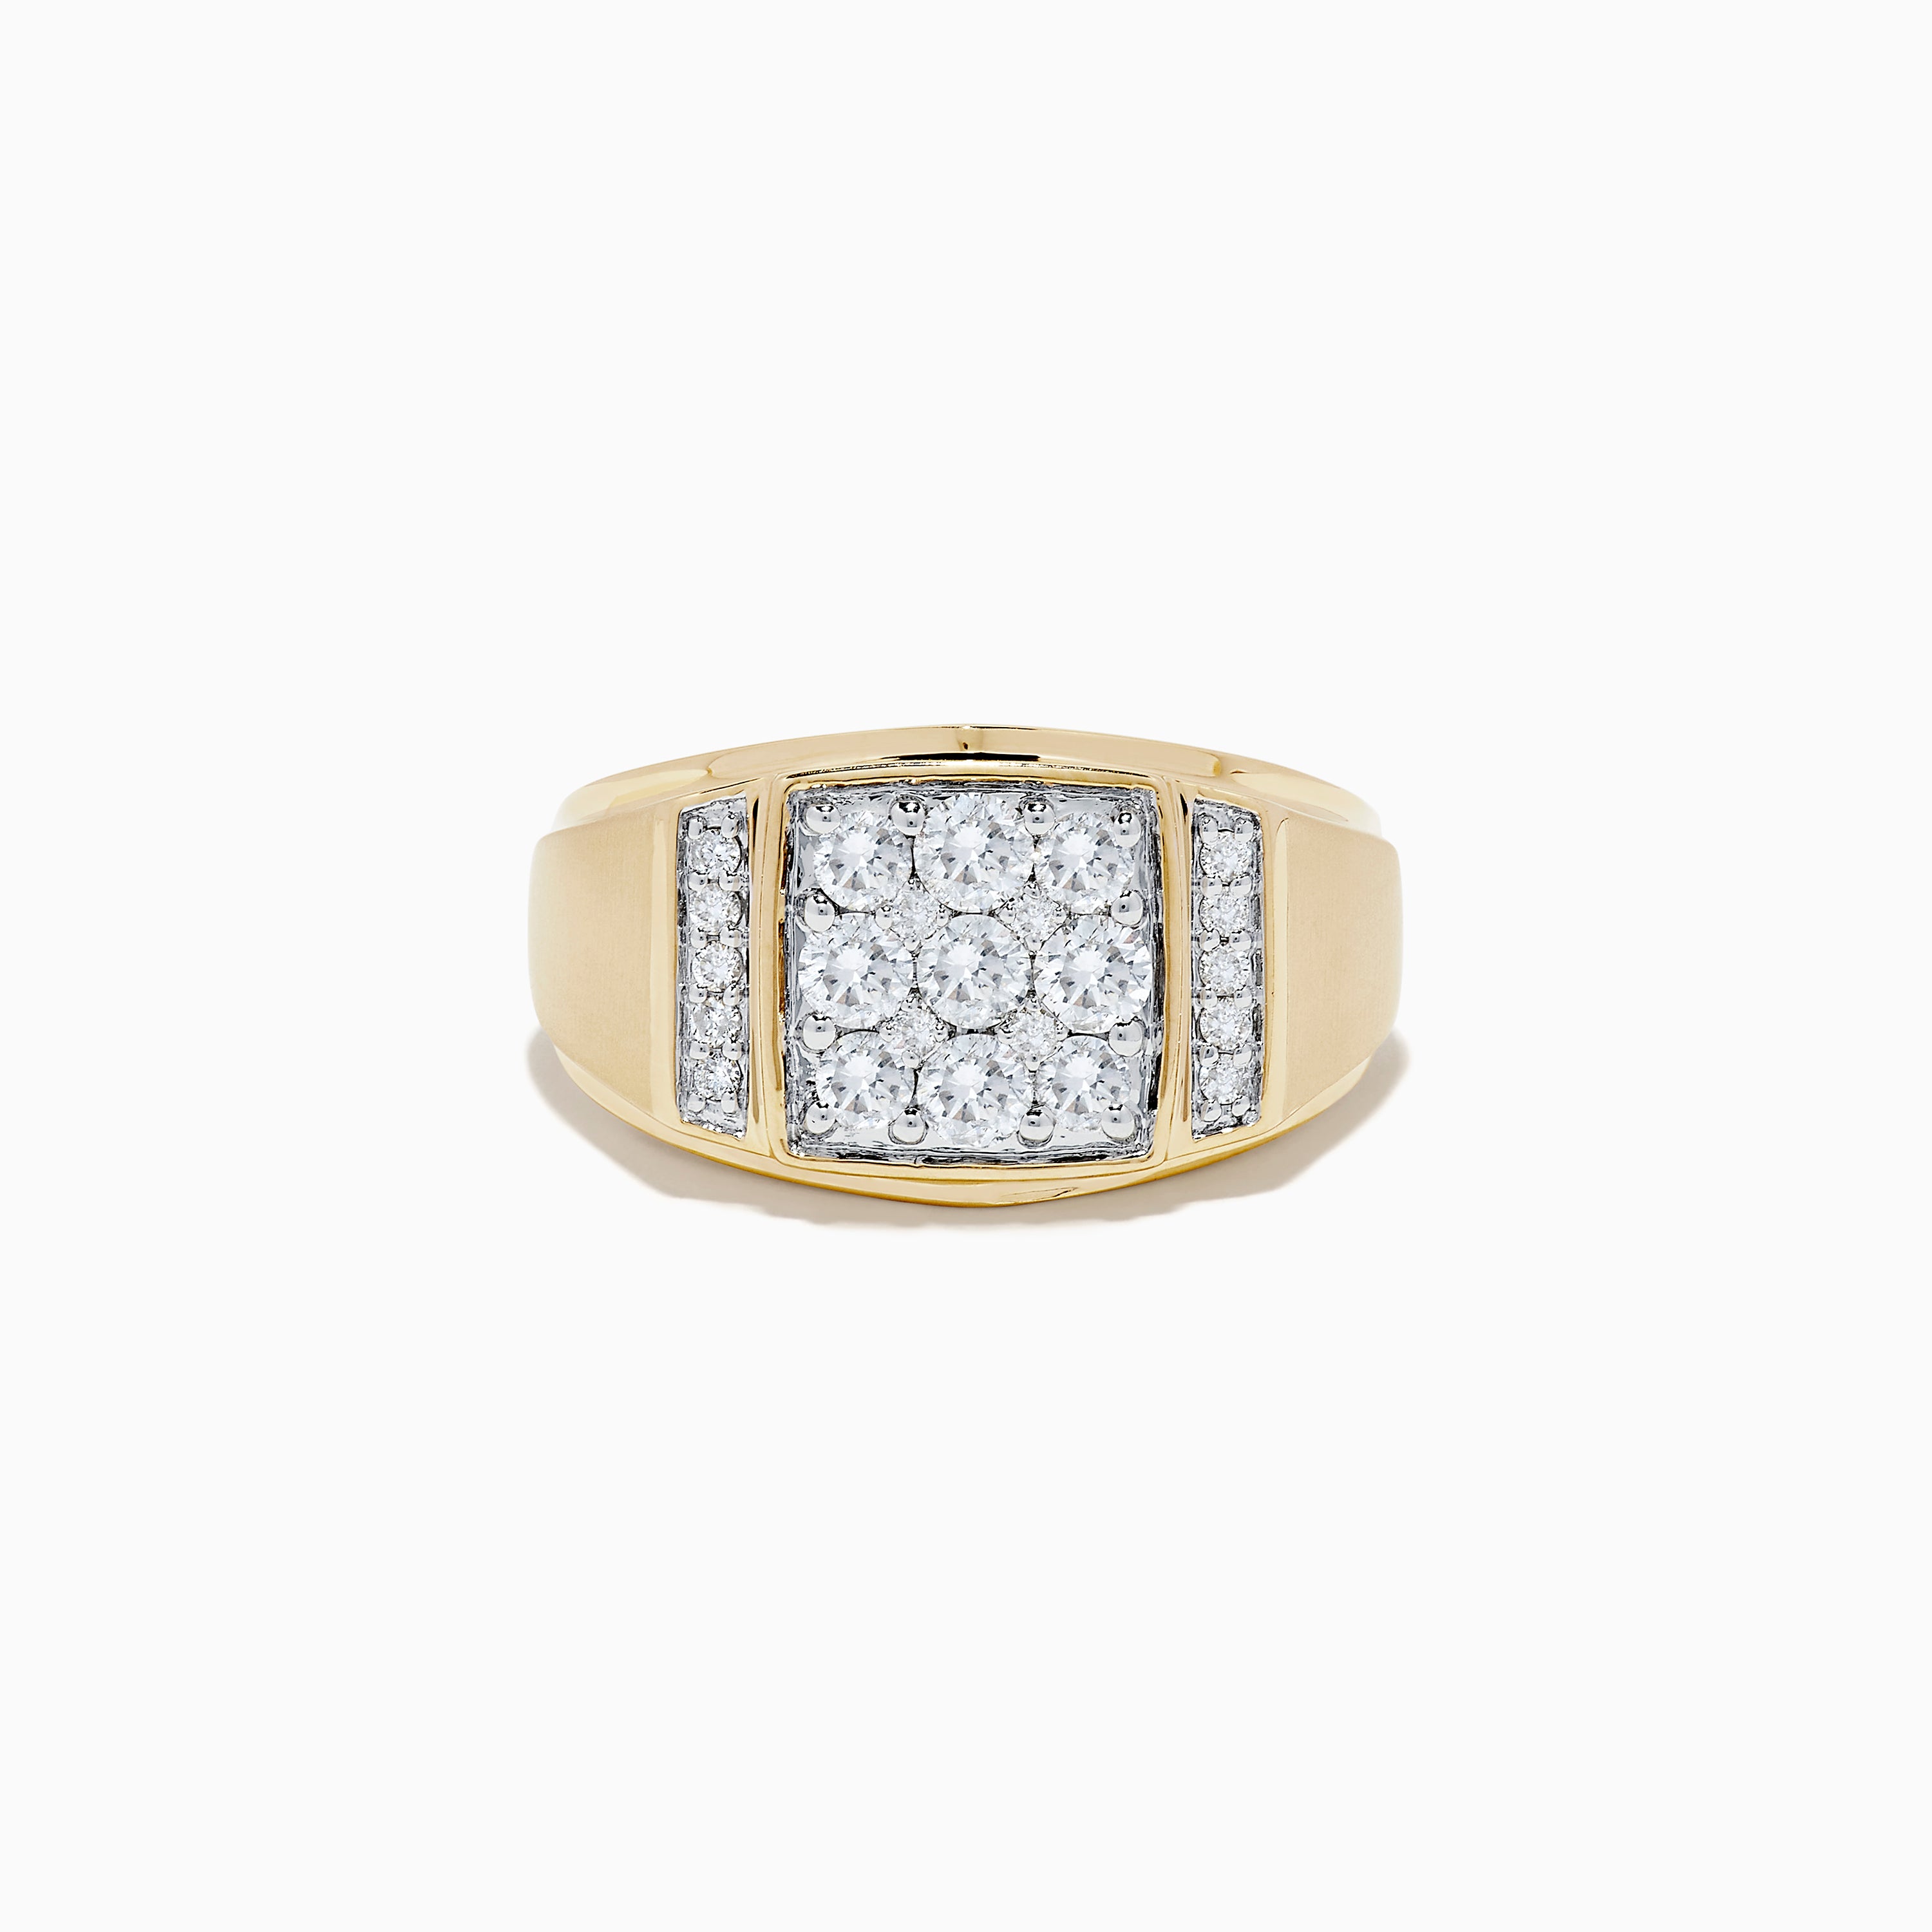 Effy Men's 14K Yellow Gold Diamond Ring